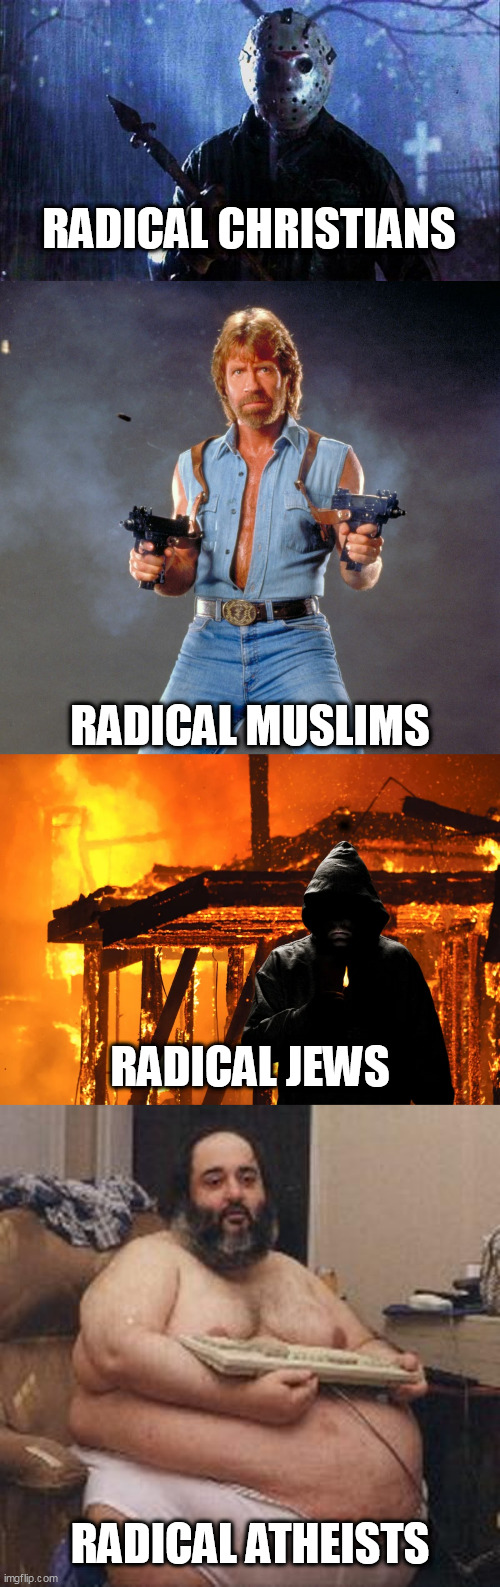 Radicals | RADICAL CHRISTIANS; RADICAL MUSLIMS; RADICAL JEWS; RADICAL ATHEISTS | image tagged in radicals,christianity,judaism,islam,atheism,extremism | made w/ Imgflip meme maker